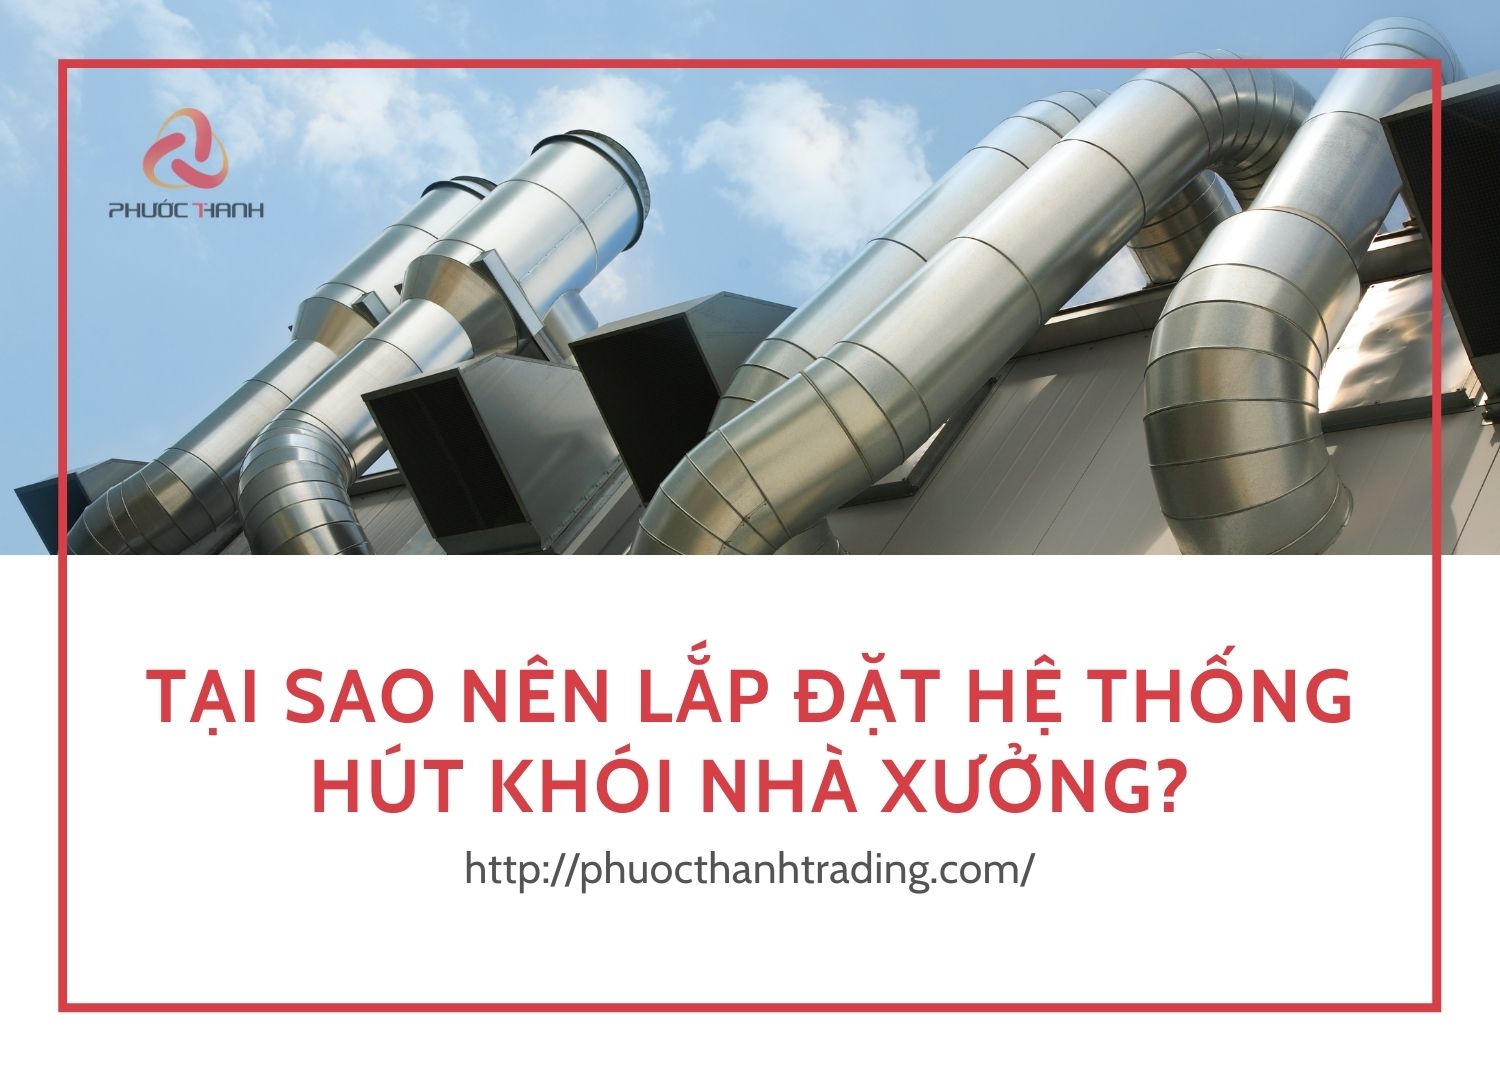 he-thong-hut-khoi-nha-xuong-Phuoc-Thanh